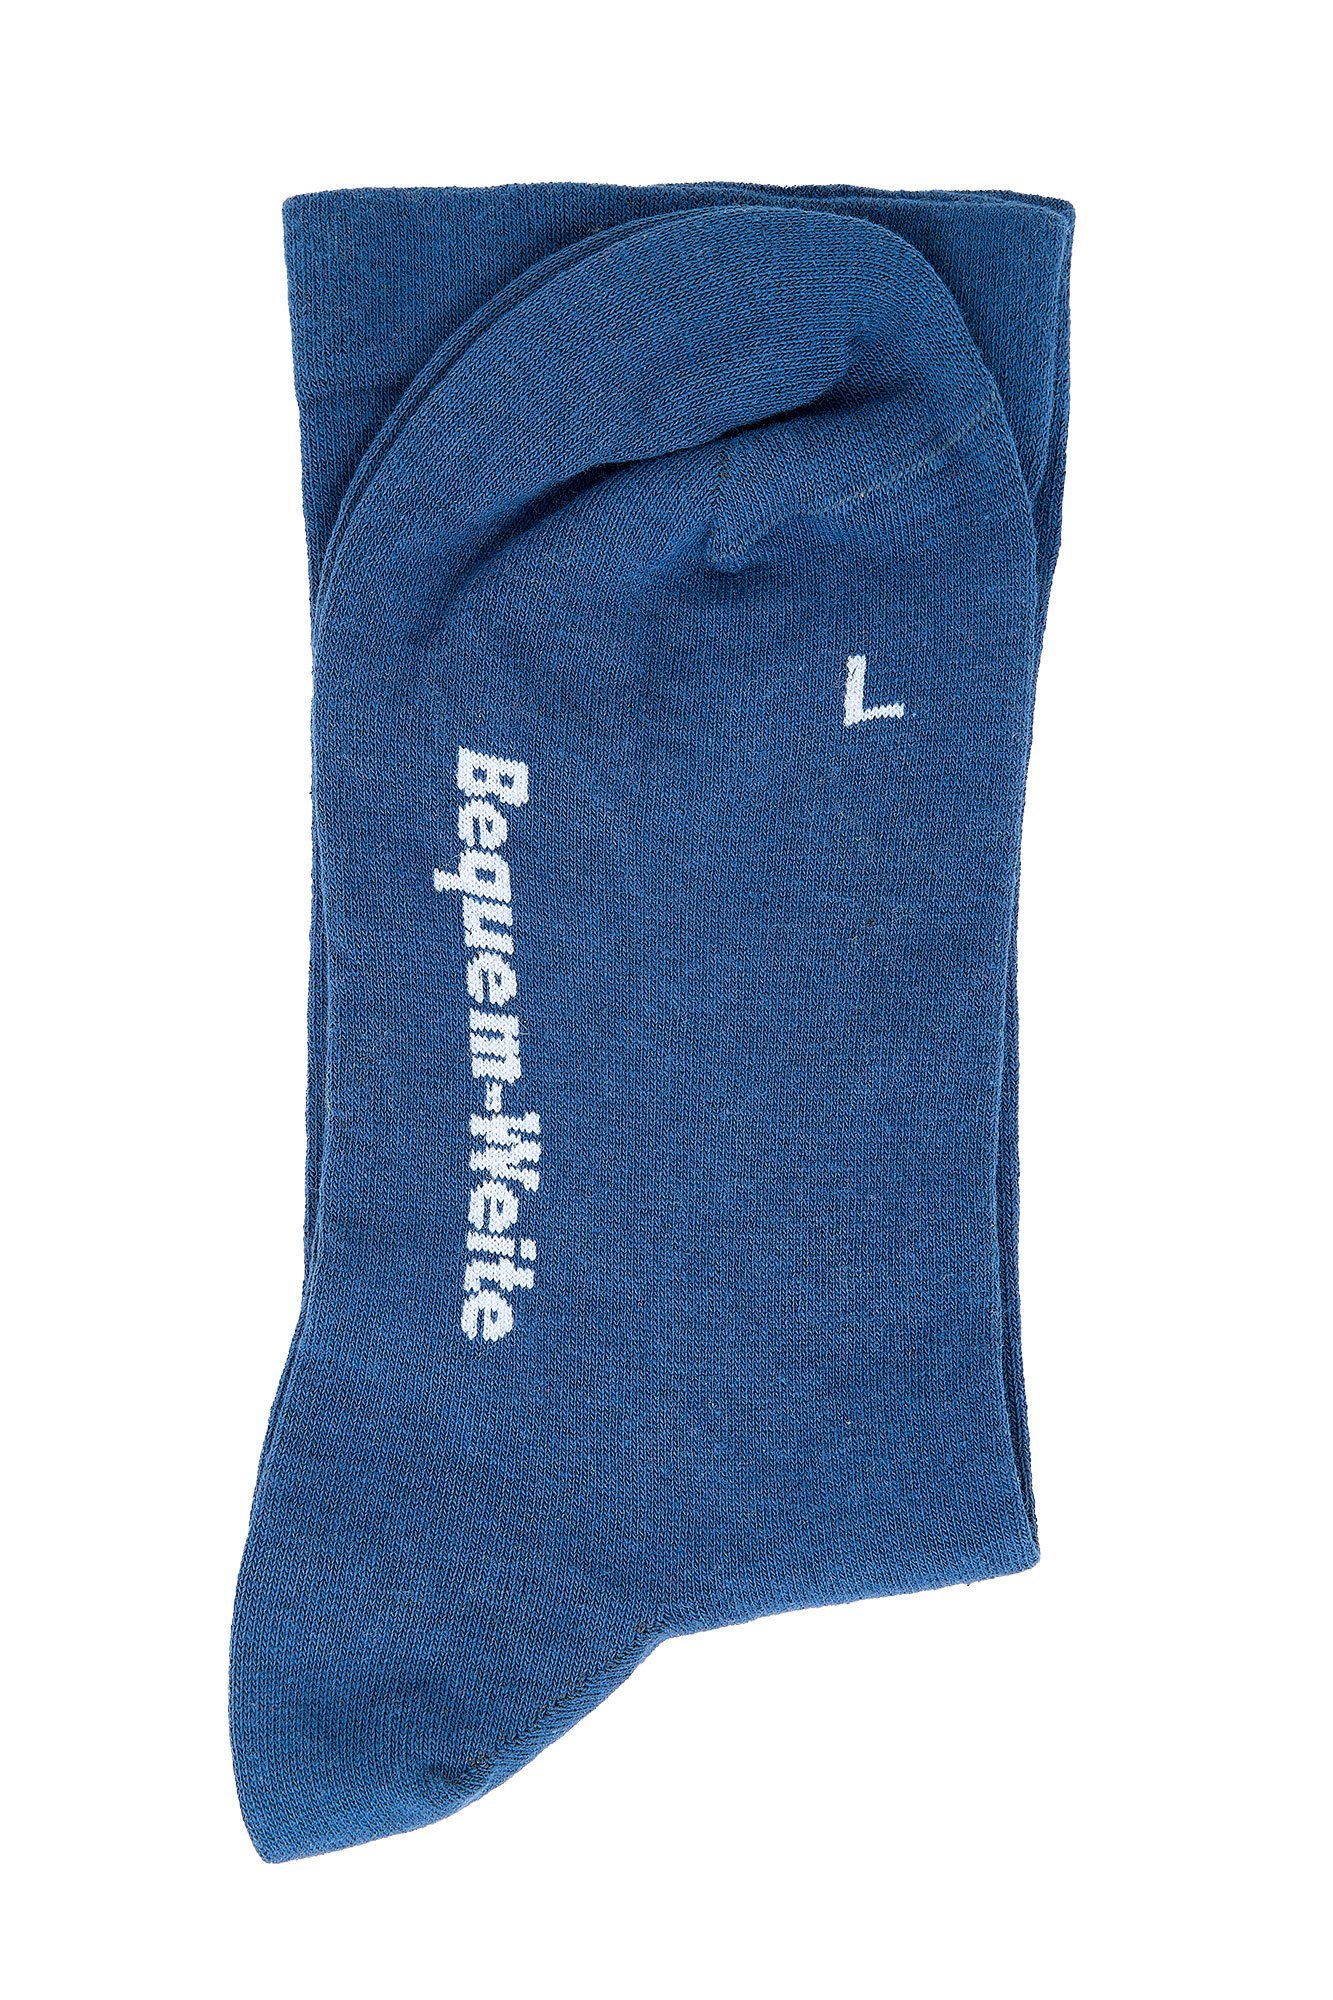 Socks (2-Paar) Diabetikersocken Paar Blau Wellness Socken Fun 4 Extra 2 Breit Baumwolle